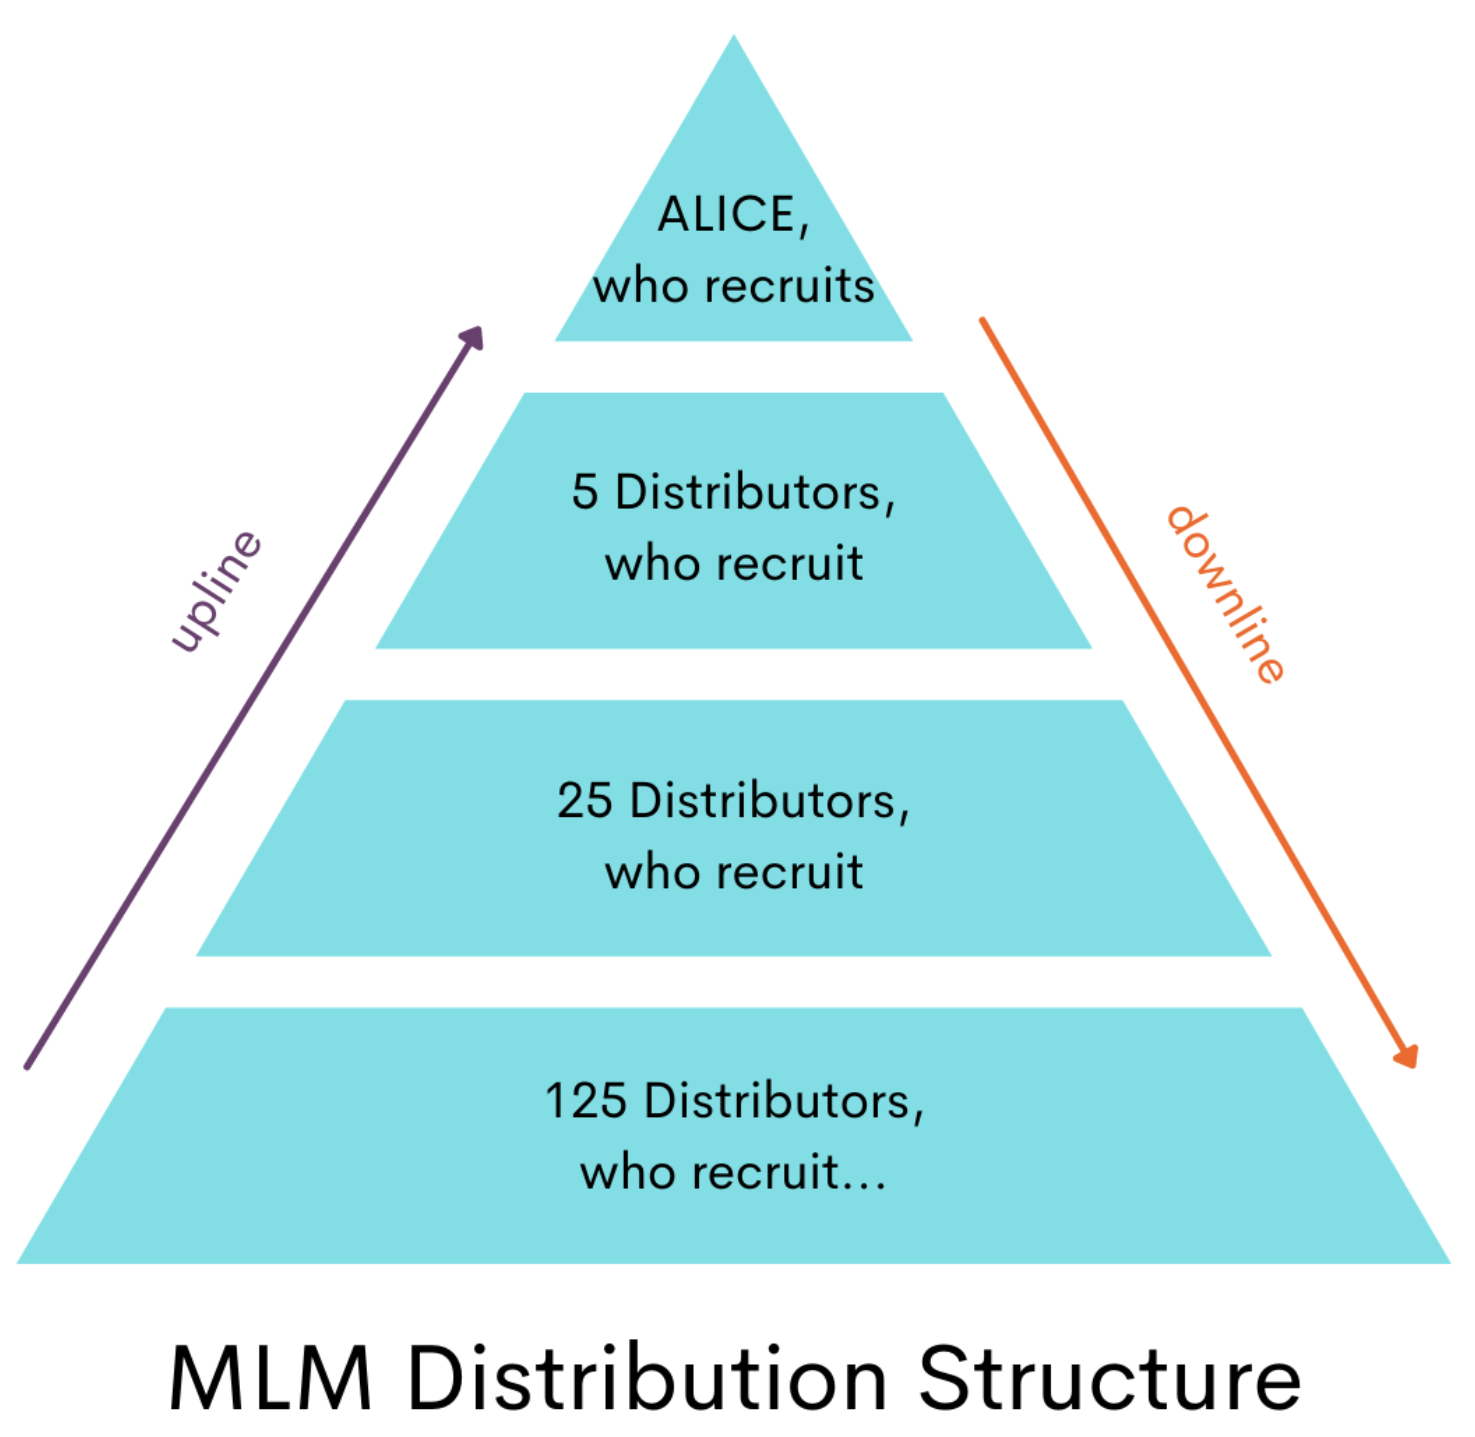 multi level marketing company - upline Alice, who recruits 5 Distributors, who recruit 25 Distributors, who recruit 125 Distributors, who recruit... downline Mlm Distribution Structure